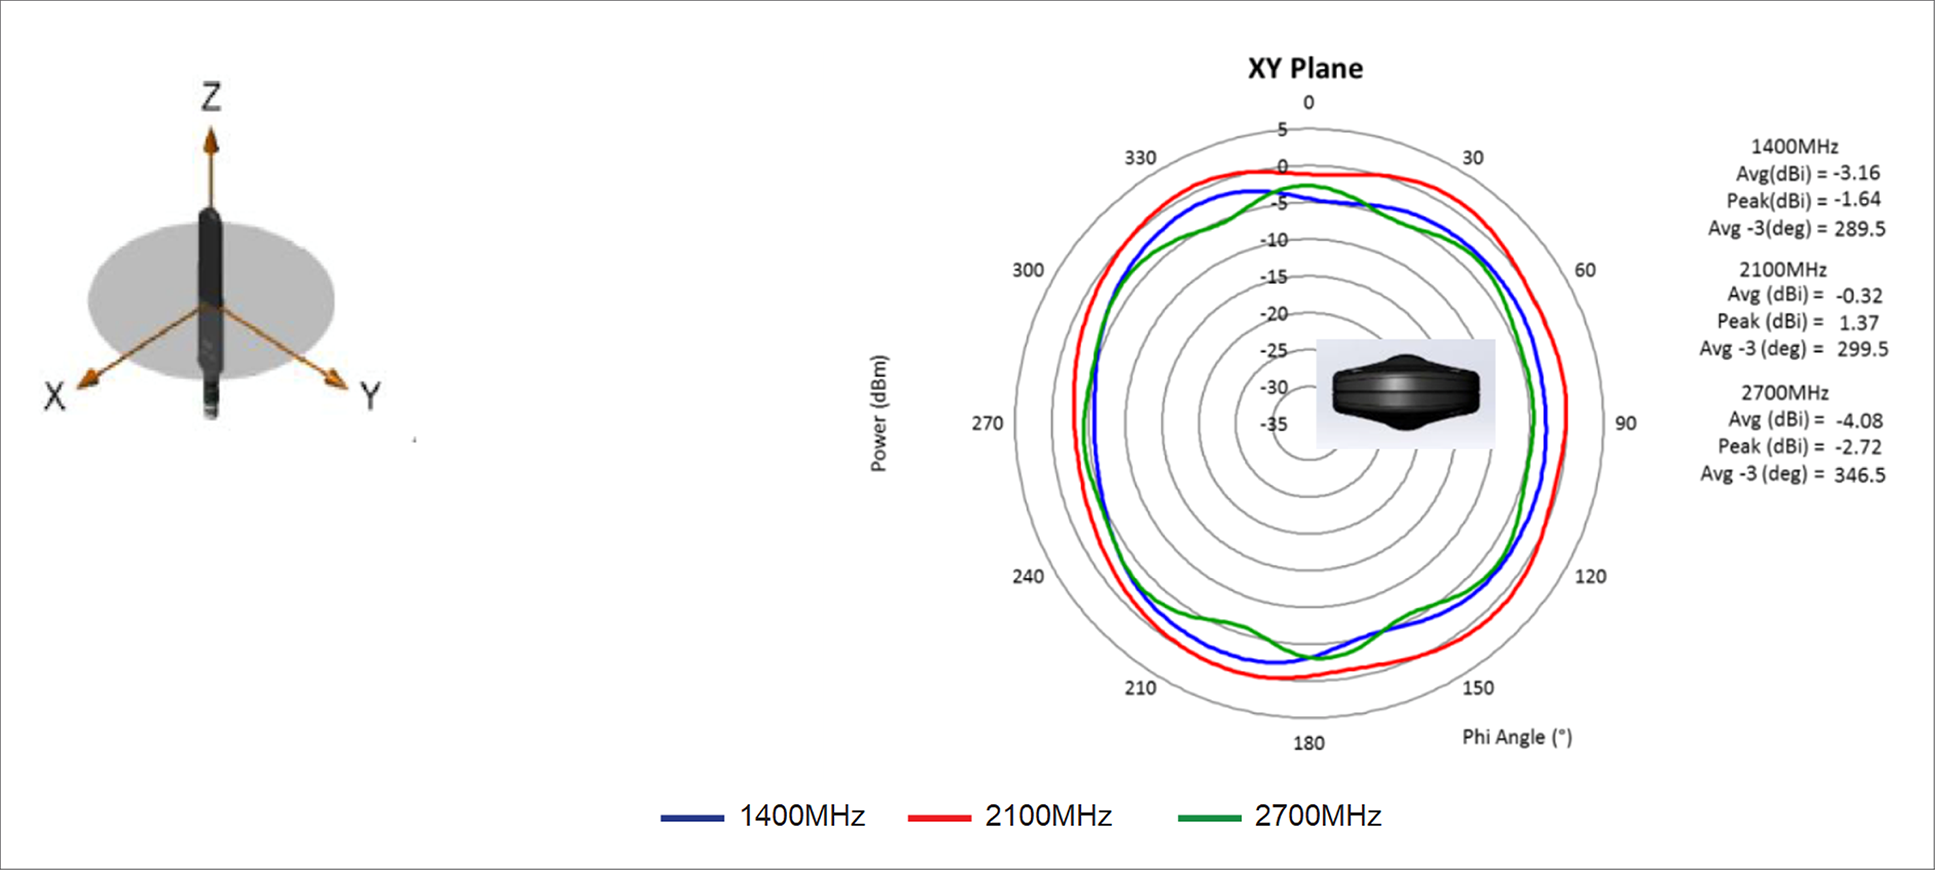 1400-, 2100-, and 2700-MHz antenna radiation patterns (dBi), azimuth